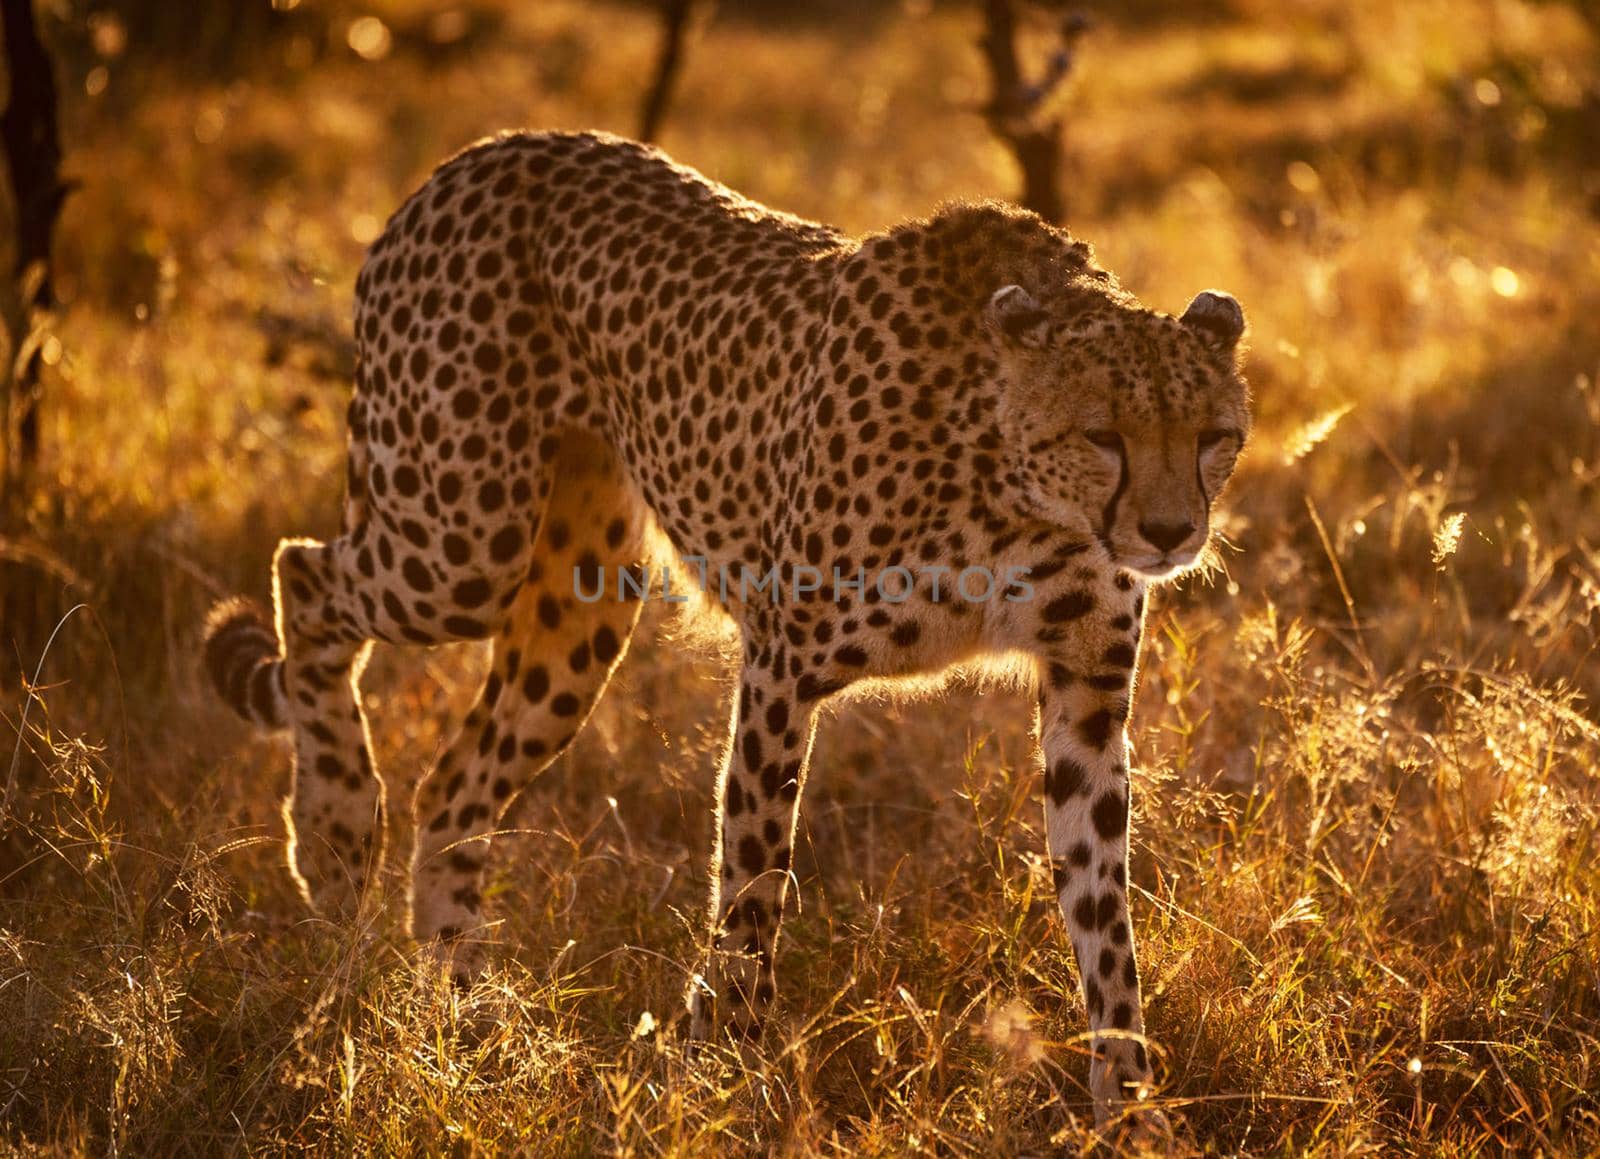 Cheetah in Wildlife by TravelSync27